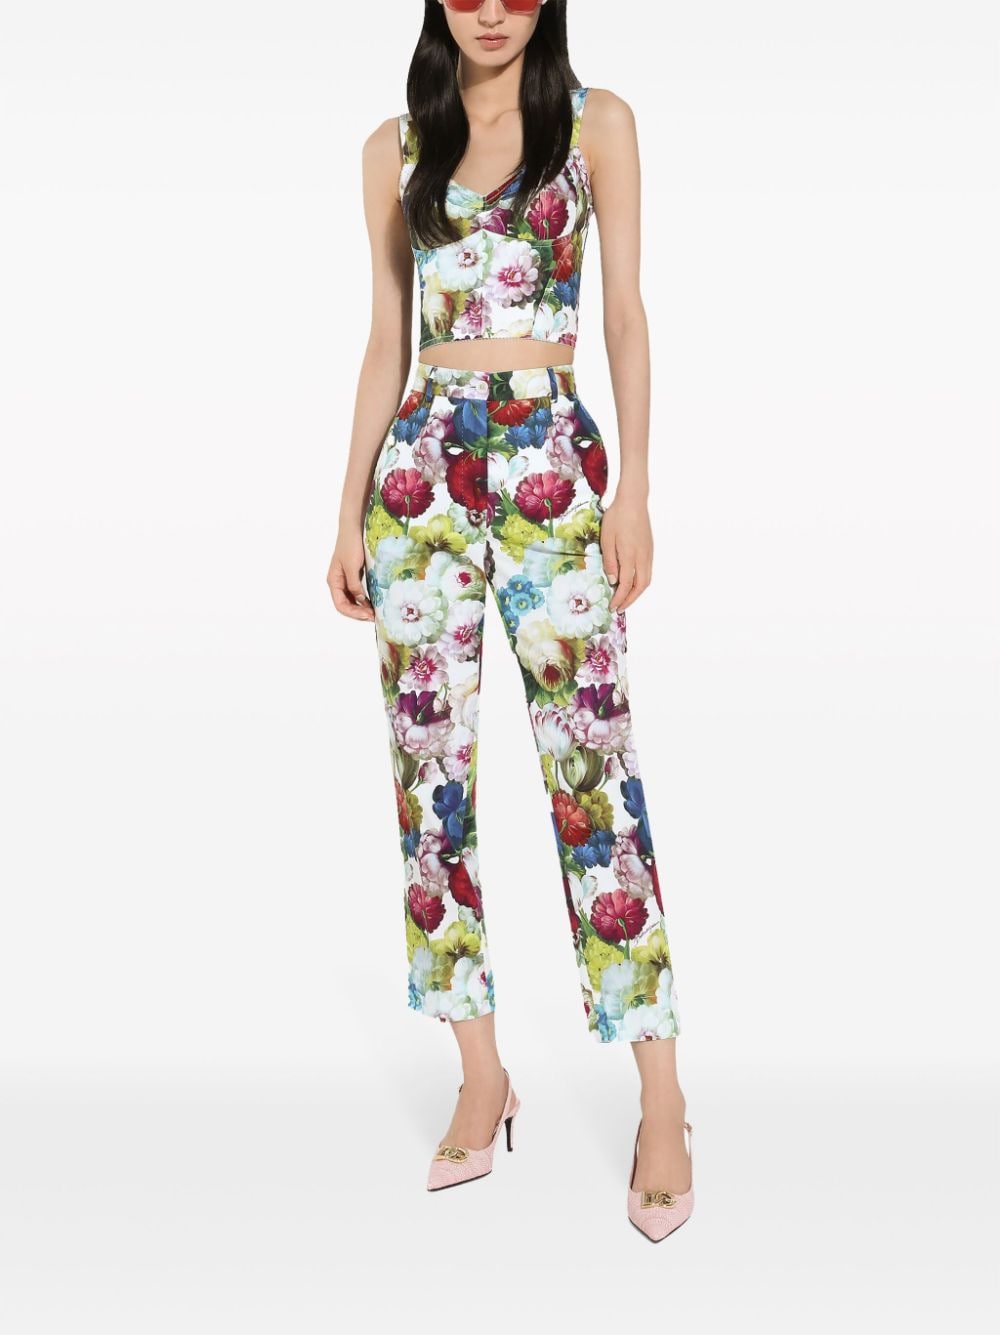 DOLCE & GABBANA Multicolored Floral-Print Cotton Trousers - High Waist, Straight Leg, Women's SS24 Fashion Item